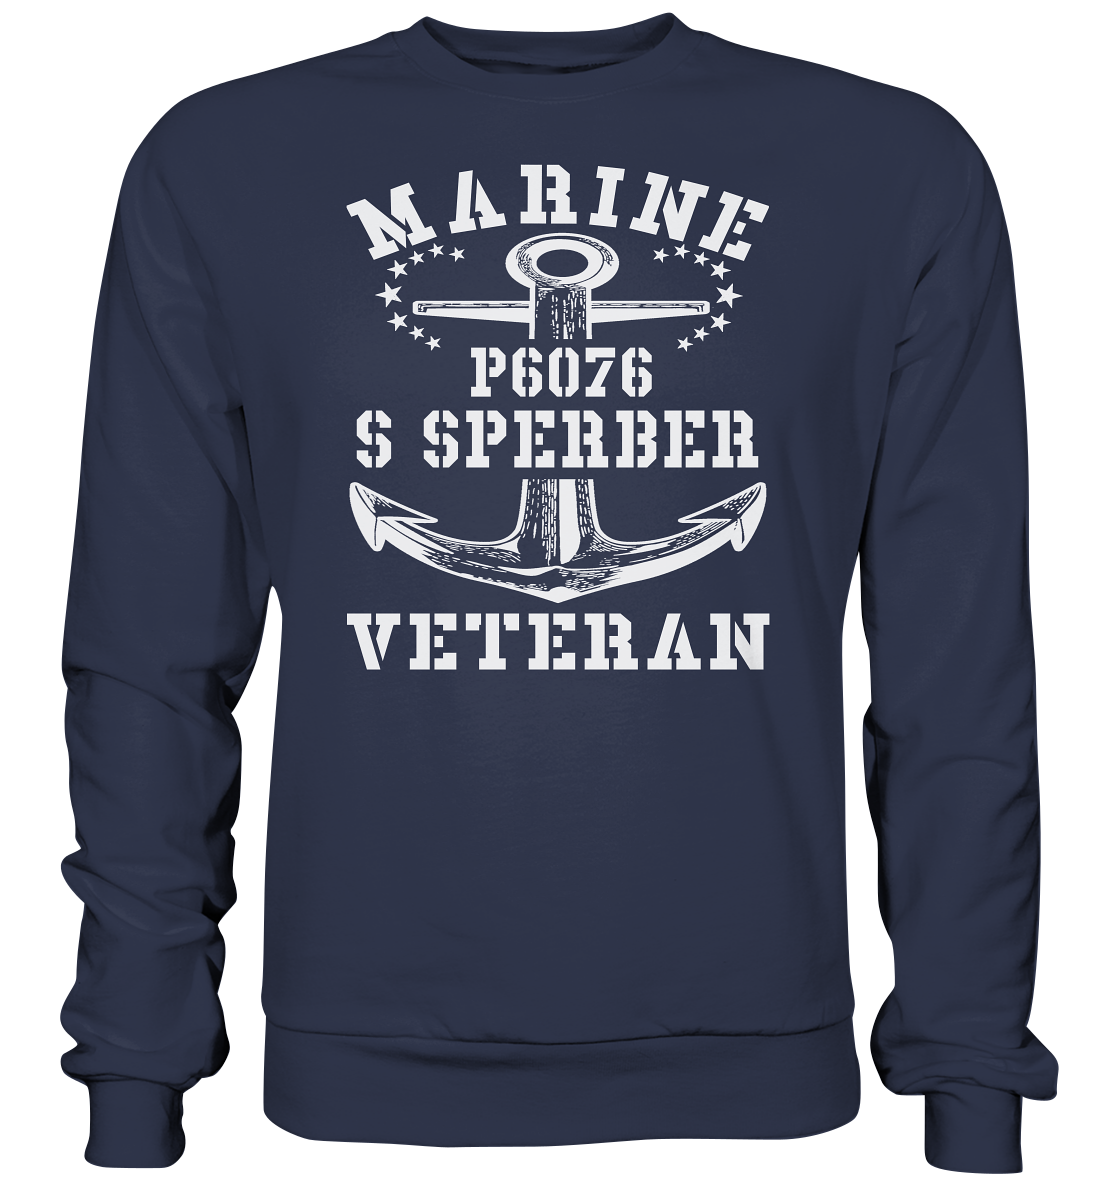 P6076 S SPERBER Marine Veteran - Premium Sweatshirt